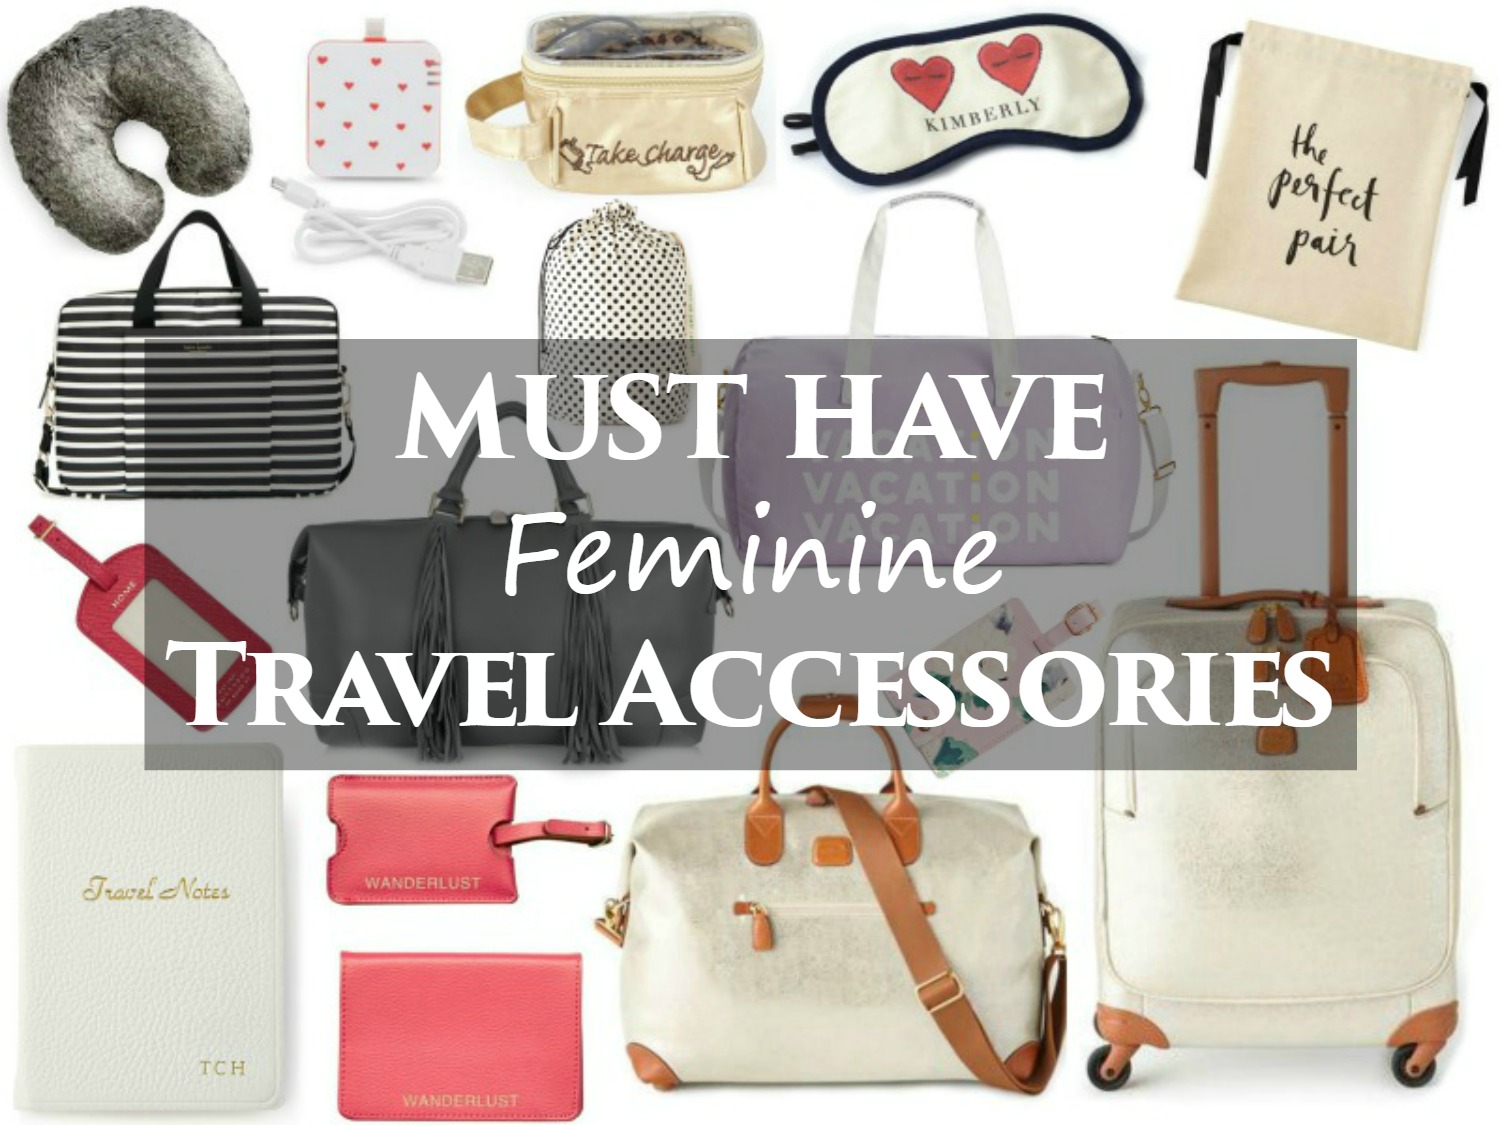 Luxury Travel Accessories for Women